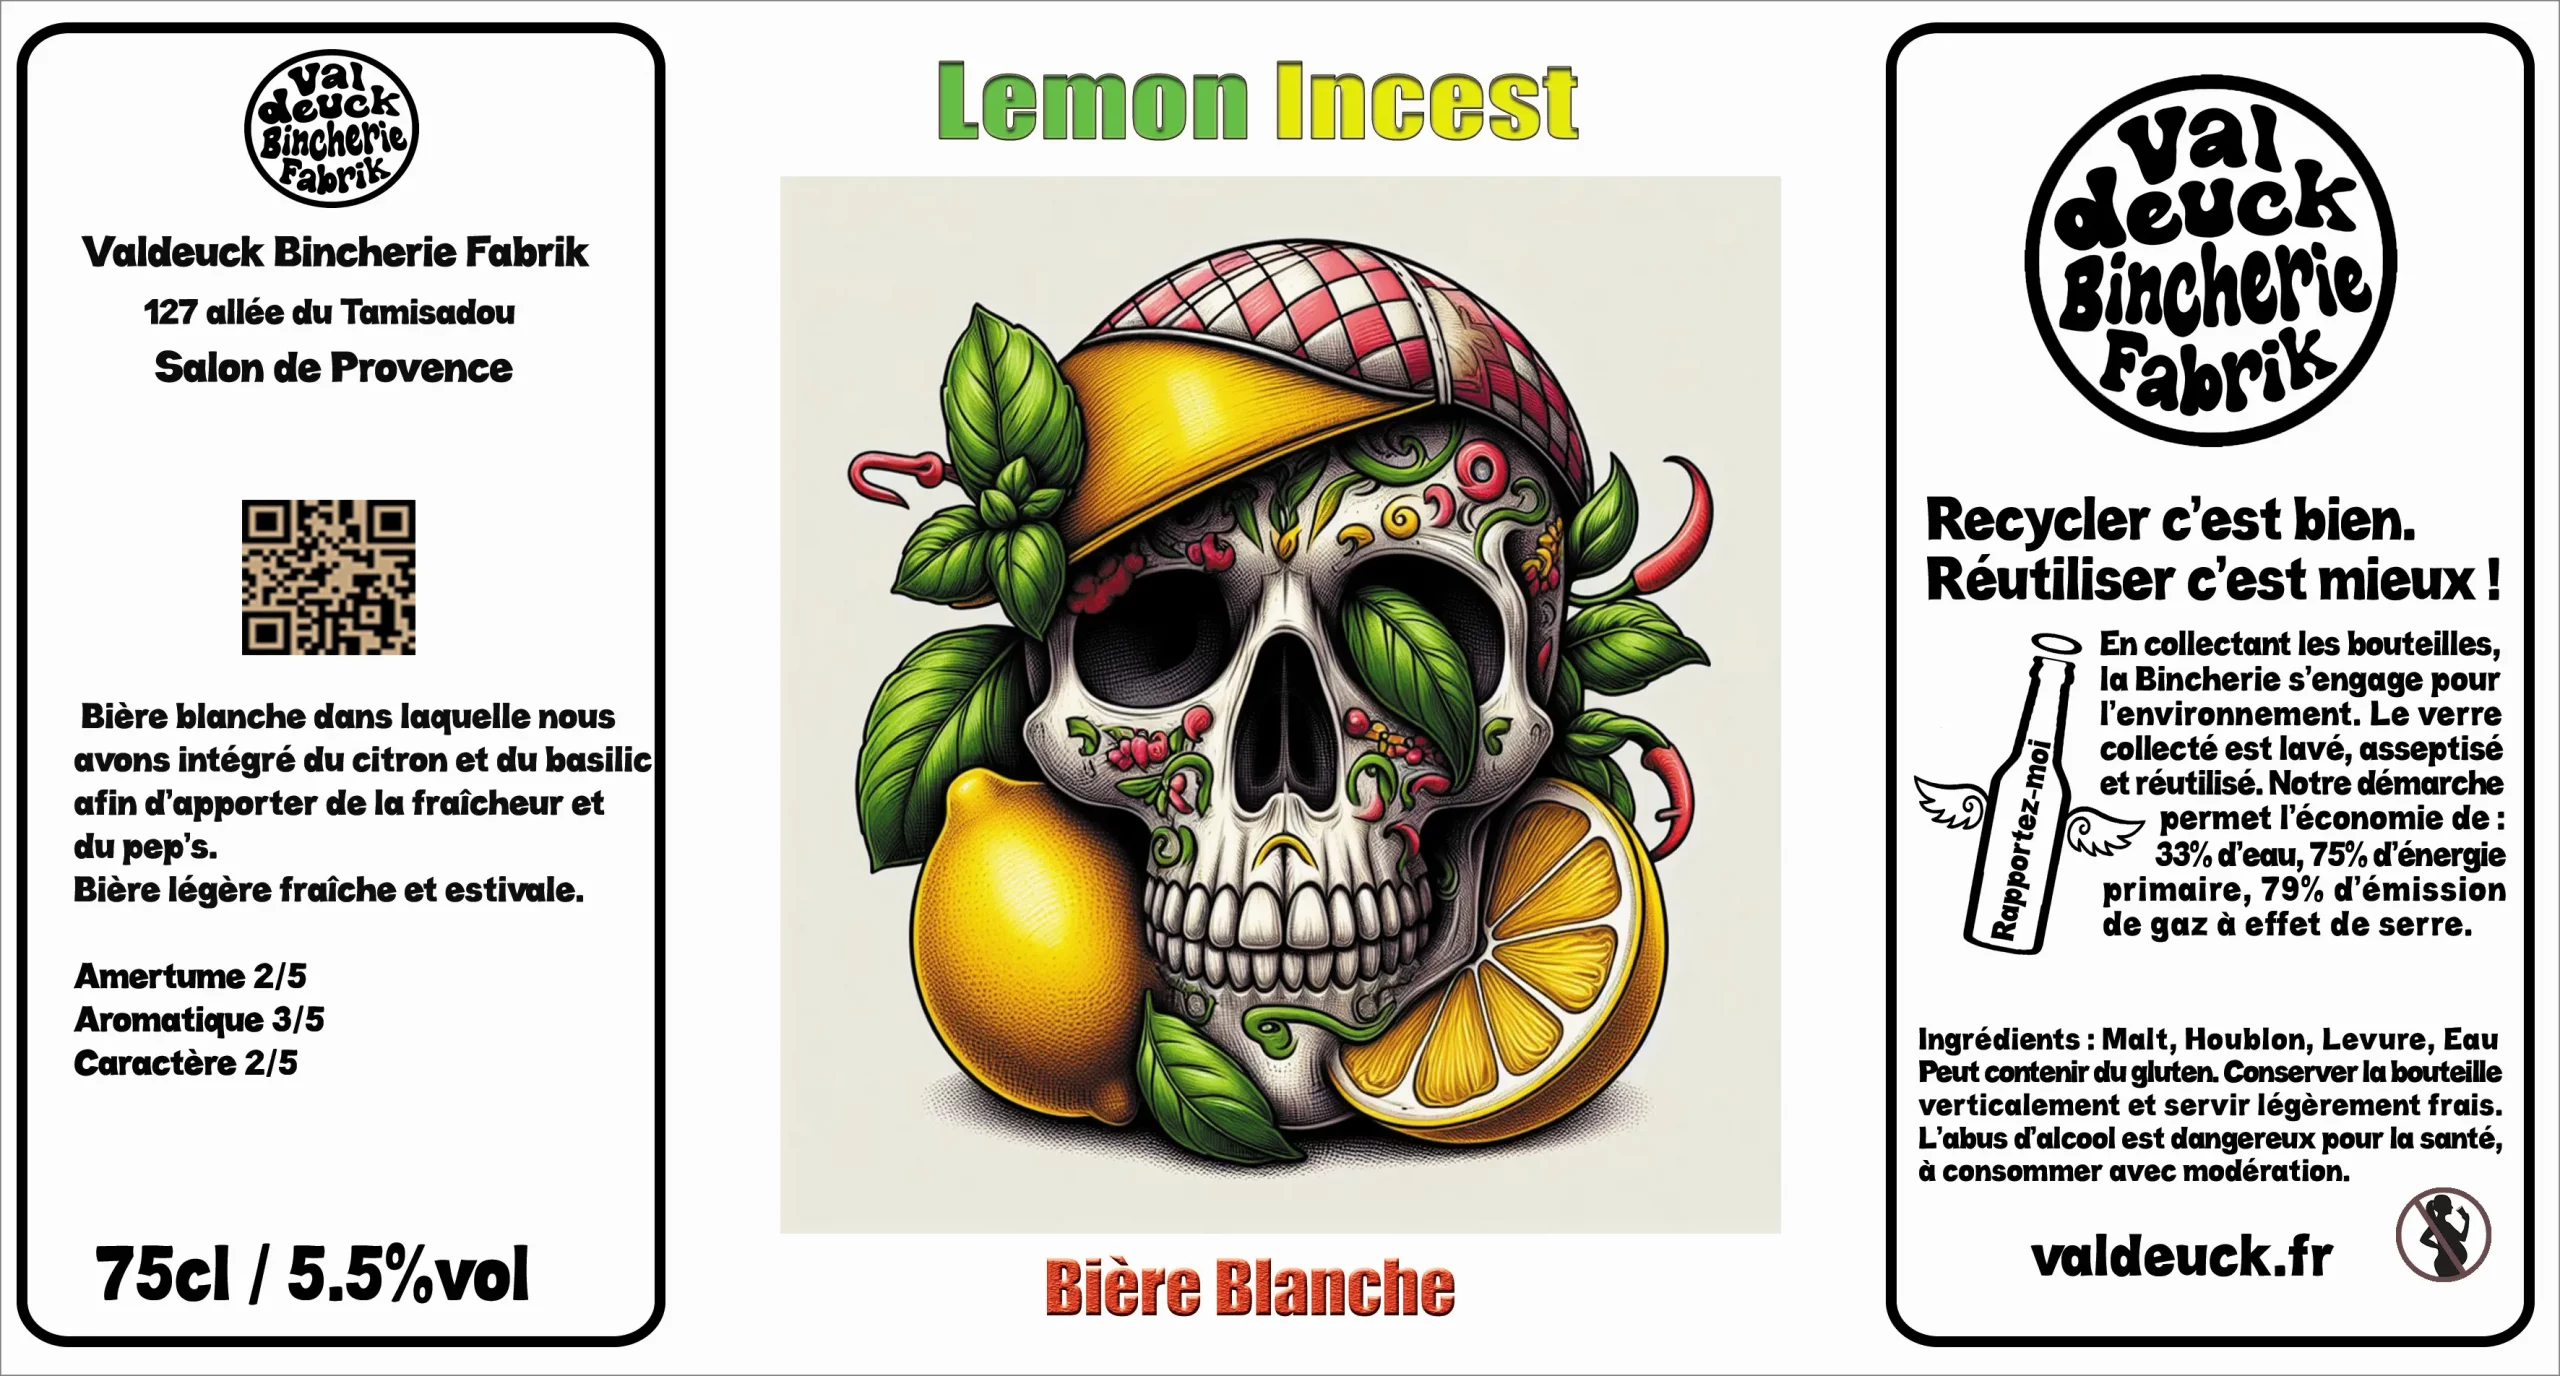 Lemon Incest (75cl) valdeuck bincherie fabrik salon de provence